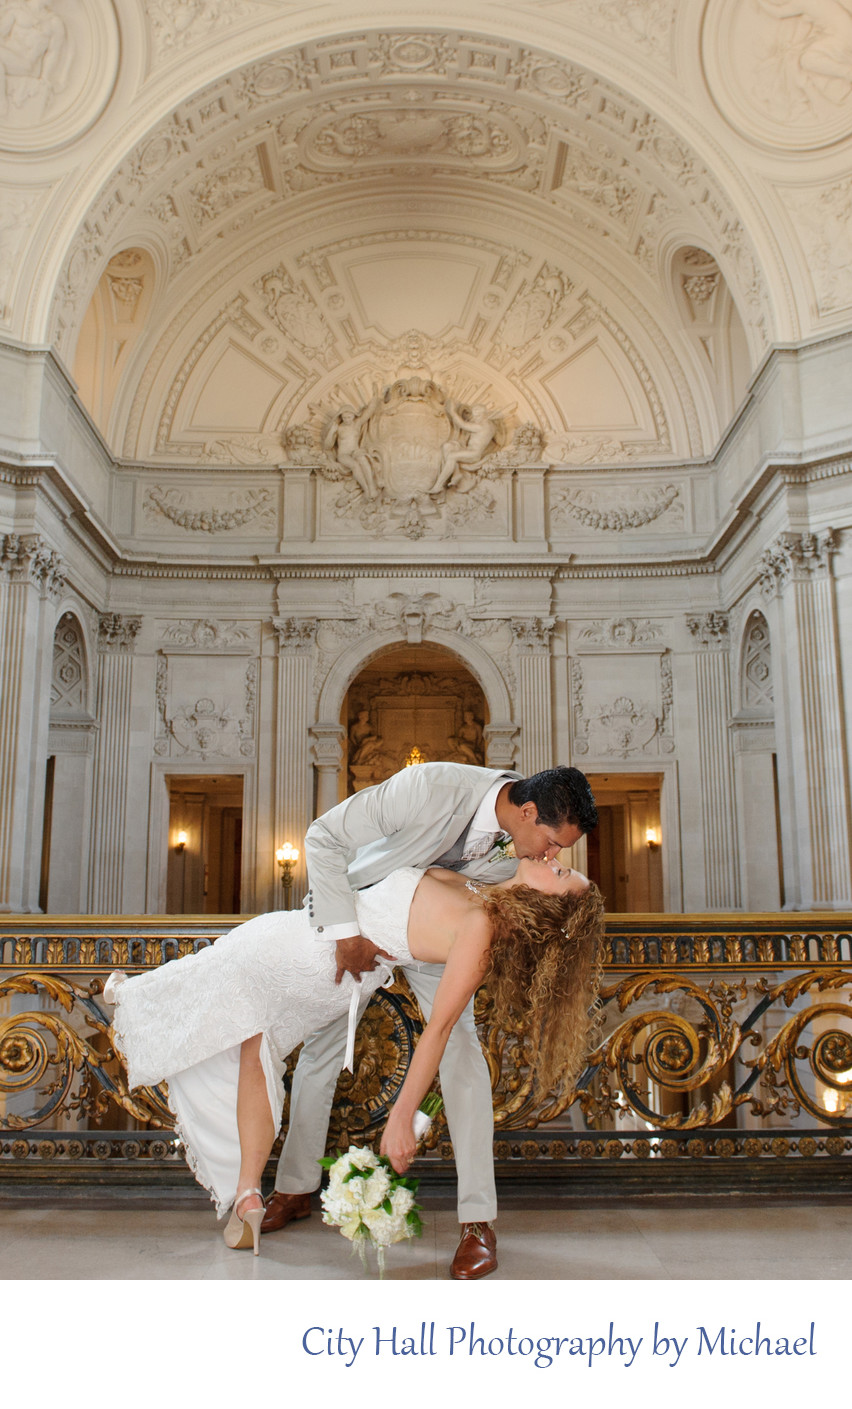 Wedding Photographer San Francisco City Hall - Deep Dance Dip Image